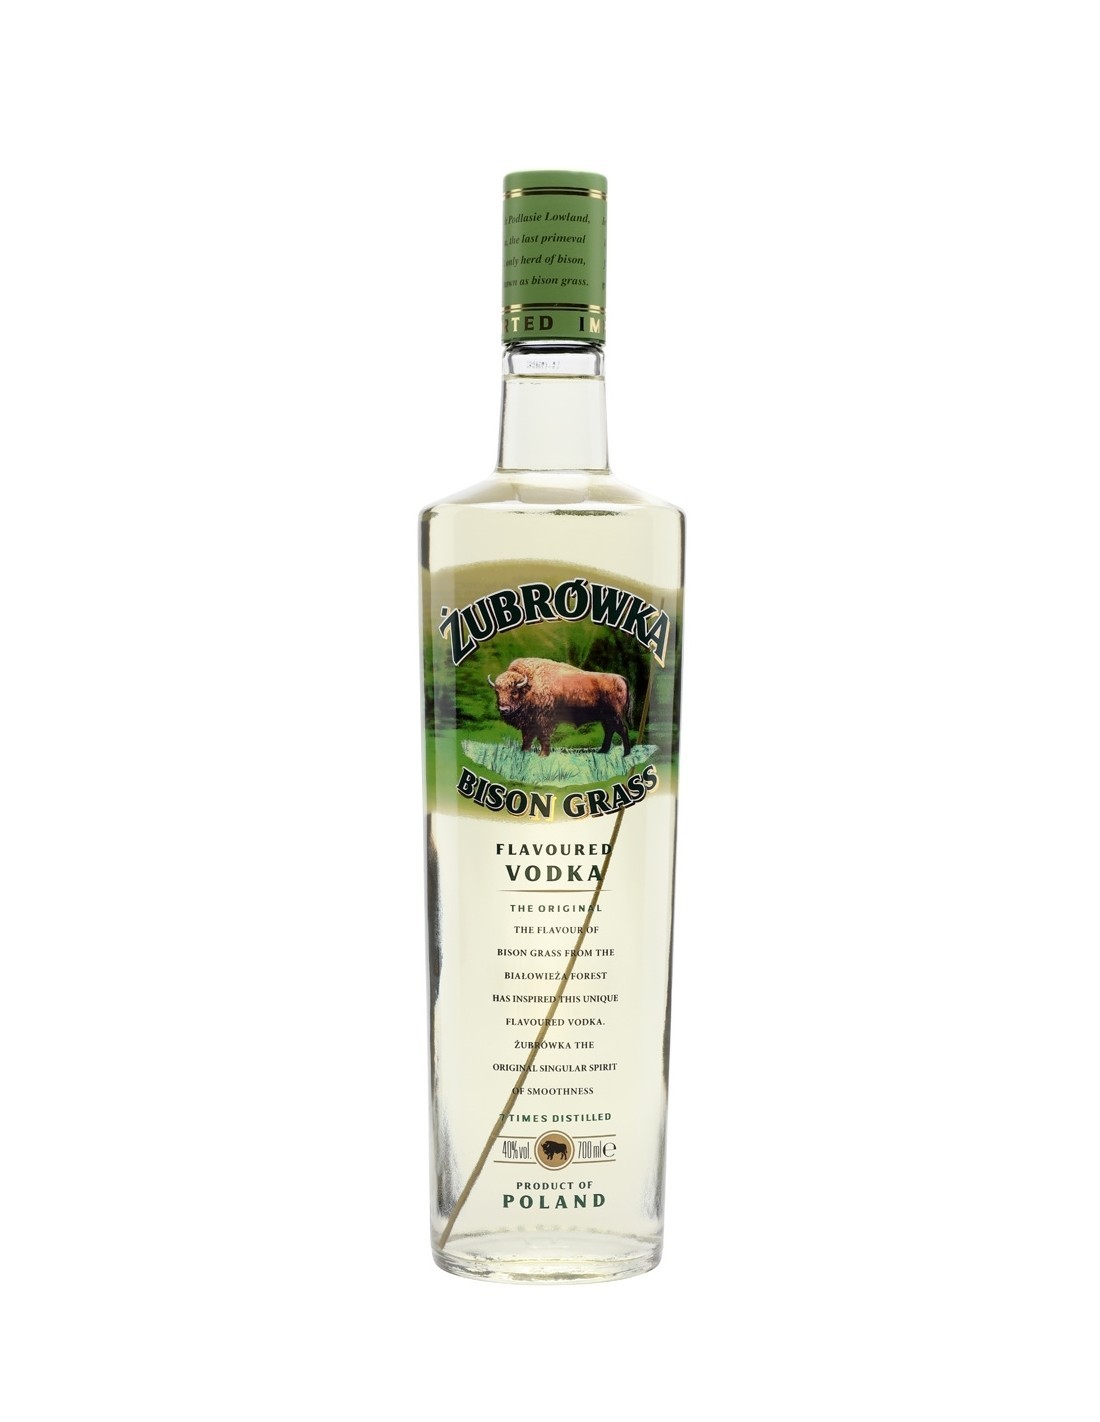 Vodca Zubrowka Bison Grass 0.7L, 37.5% alc., Polonia alcooldiscount.ro